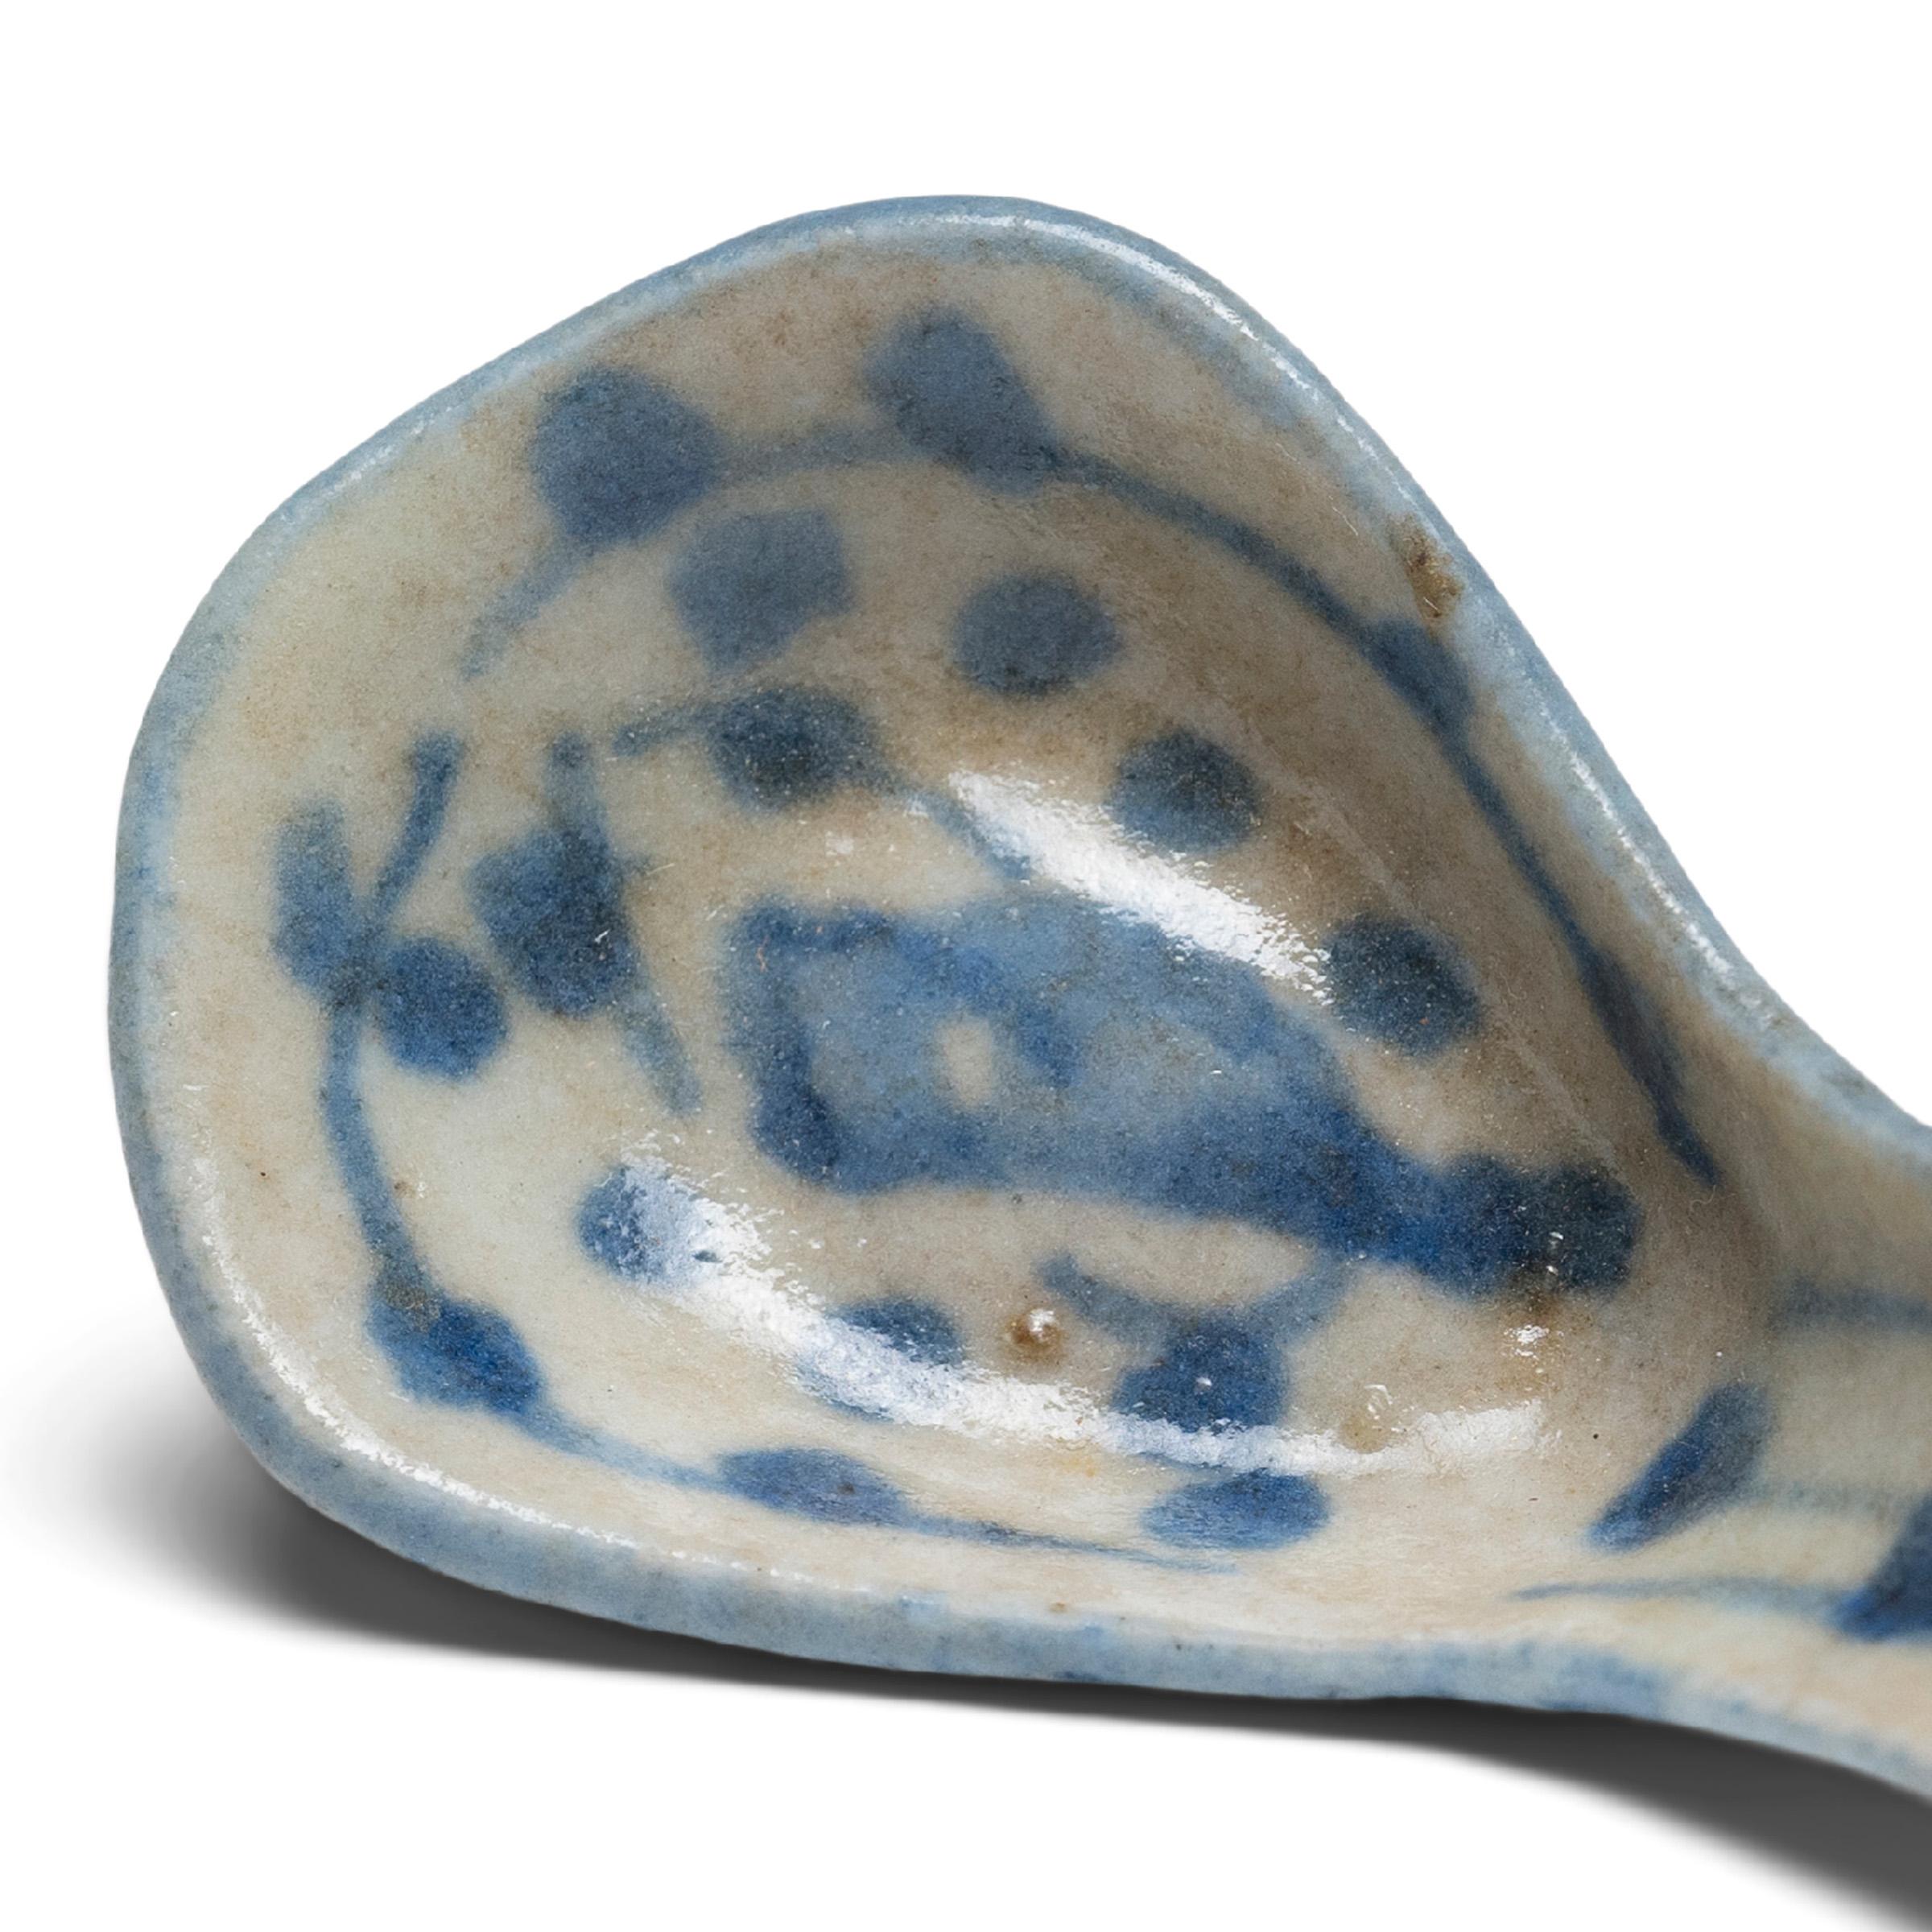 Qing Cuillère chinoise bleue et blanche, c. 1850